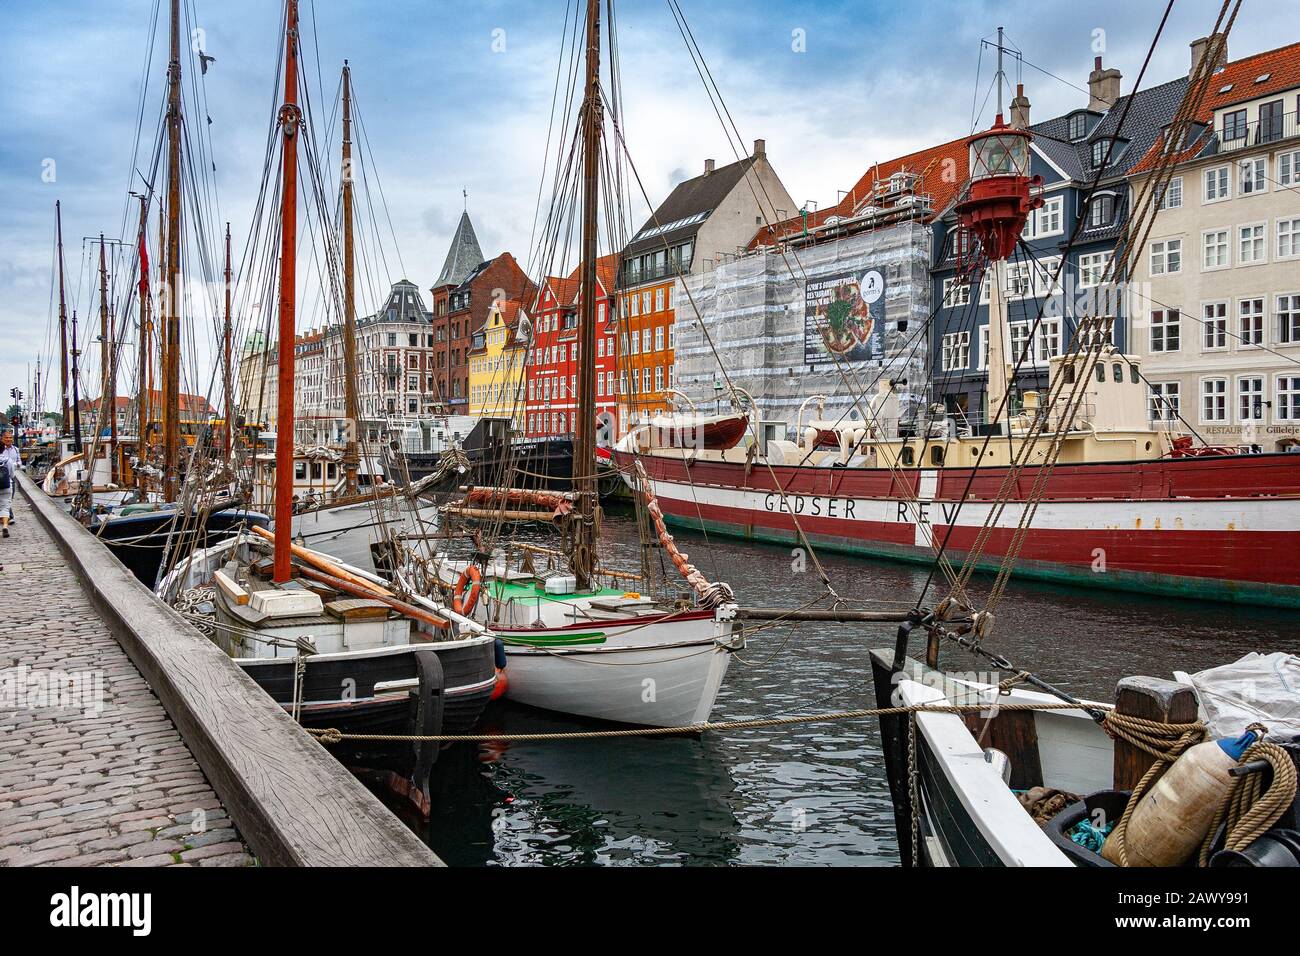 Gedser Rev, Museumsschiff auf Nyhavn Kanal Stockfoto